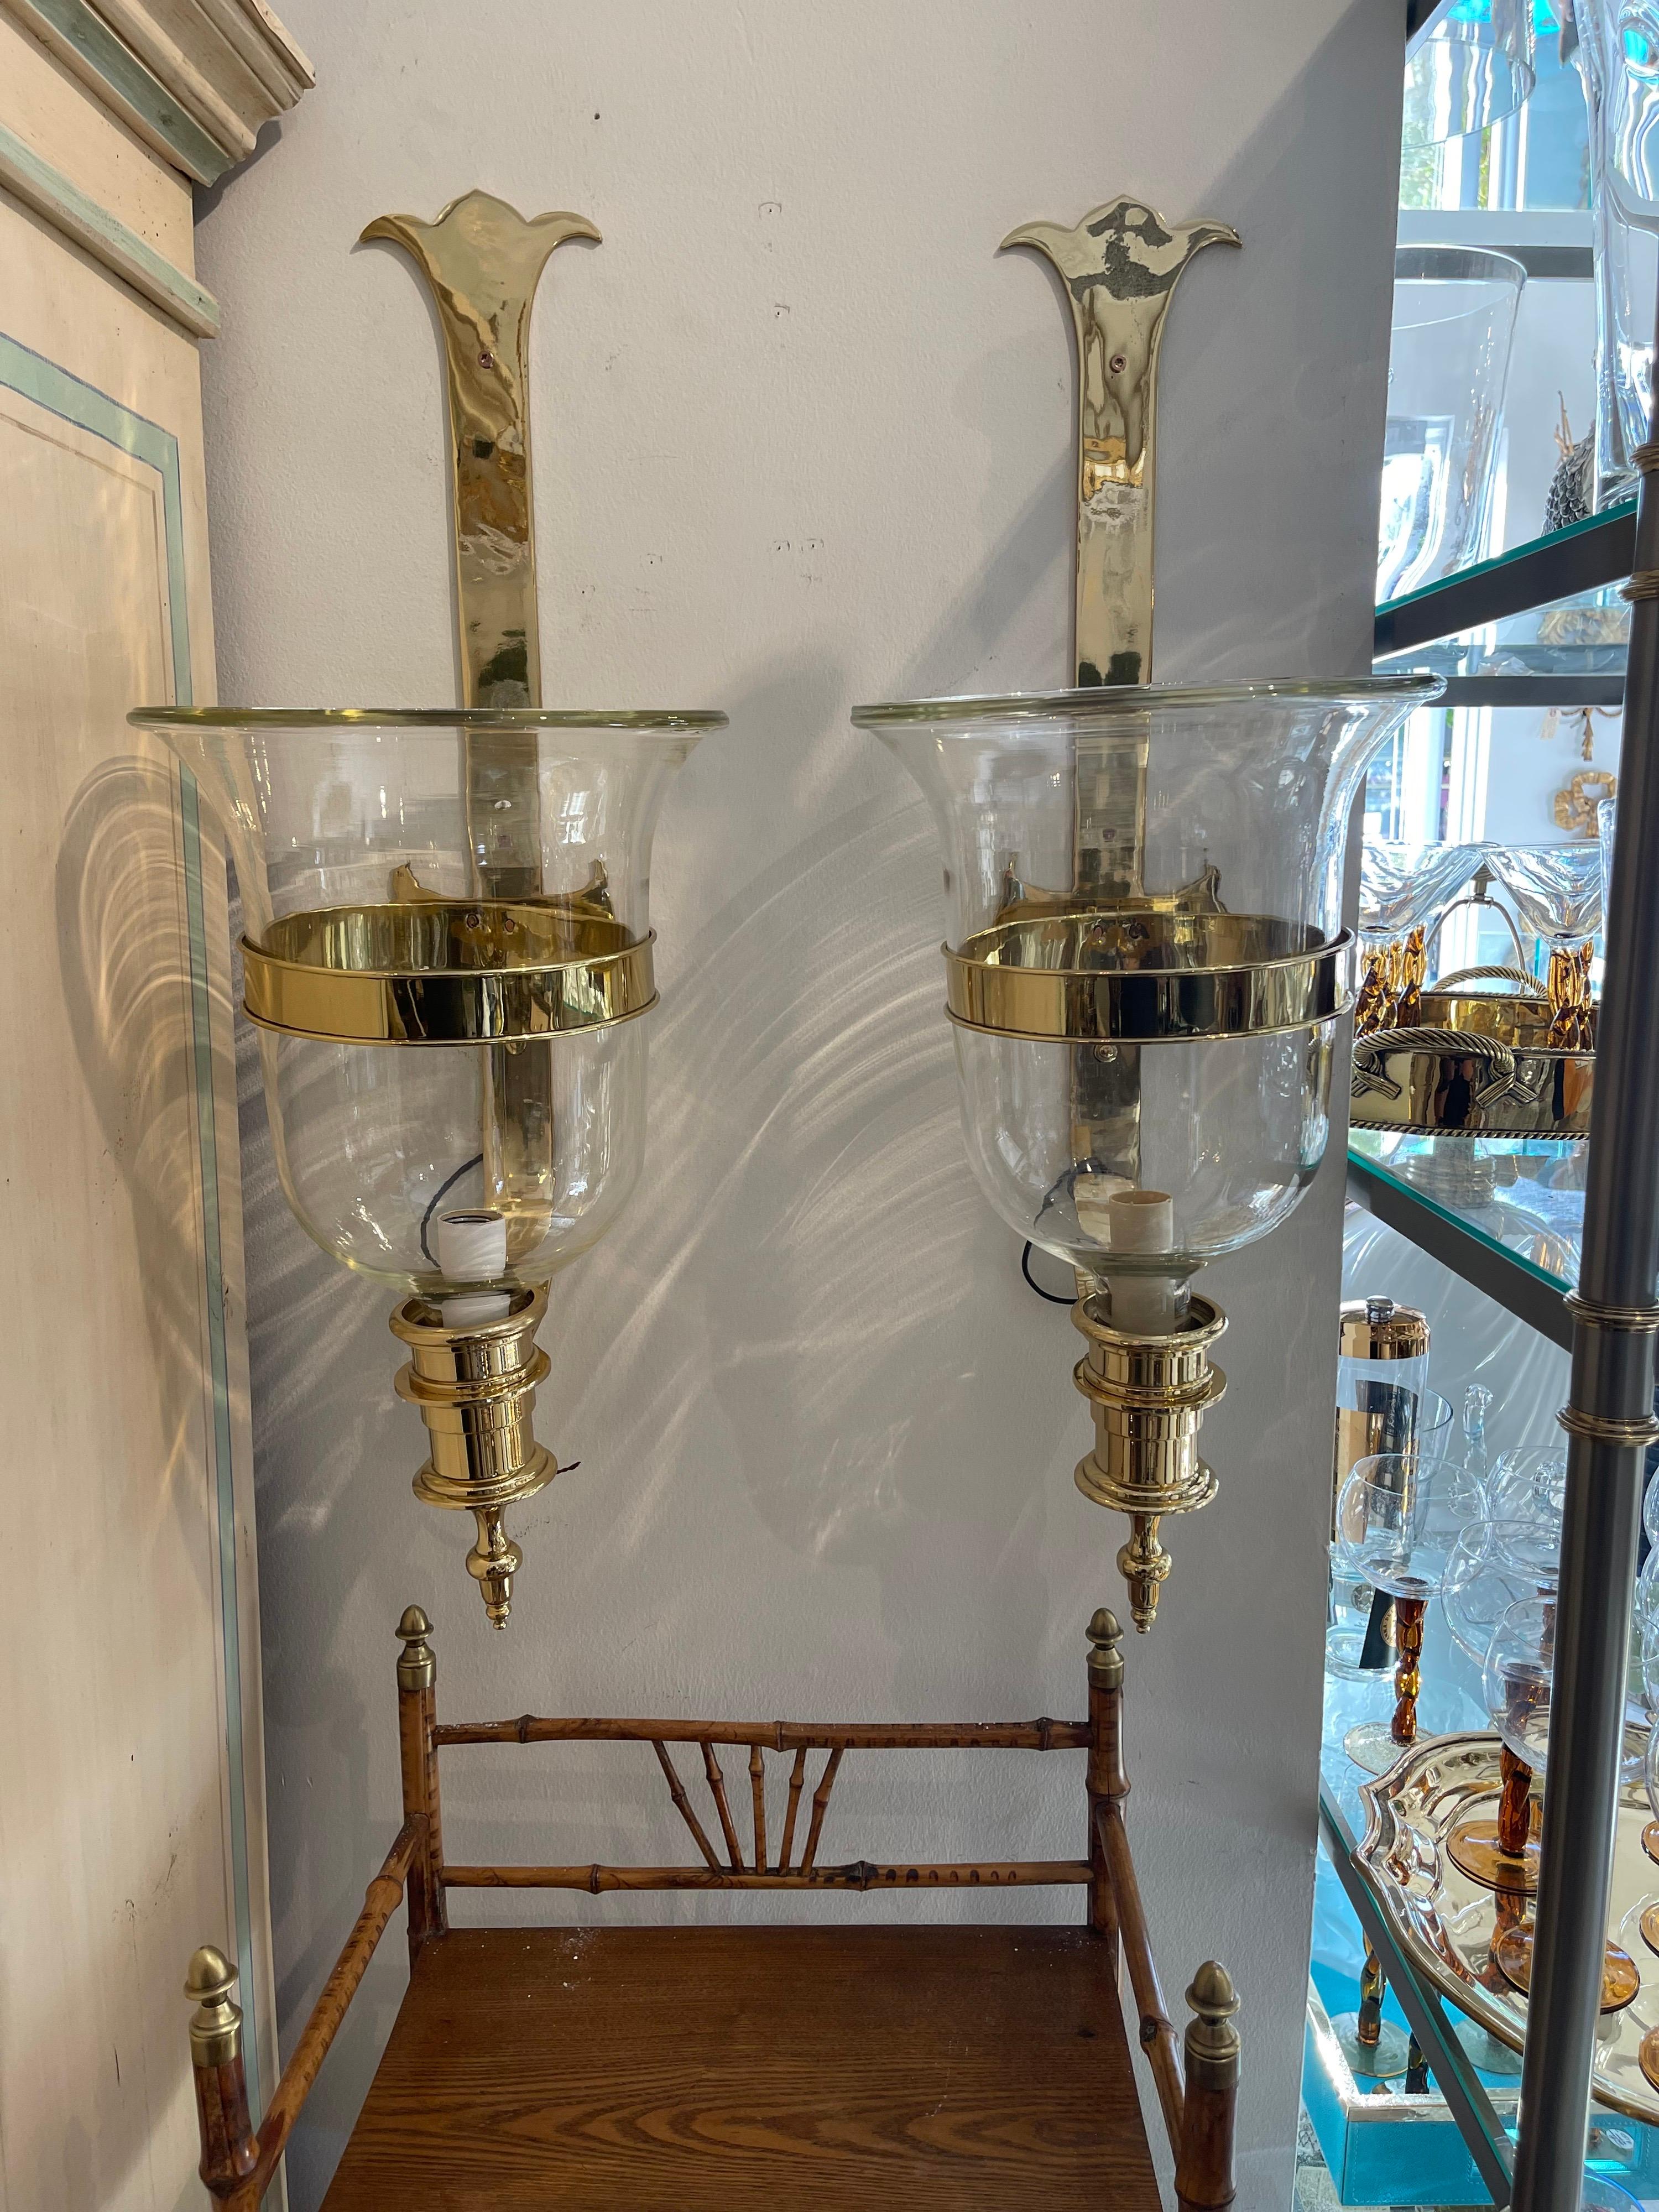 Pair of brass & glass electrified hurricane lanterns / sconces.